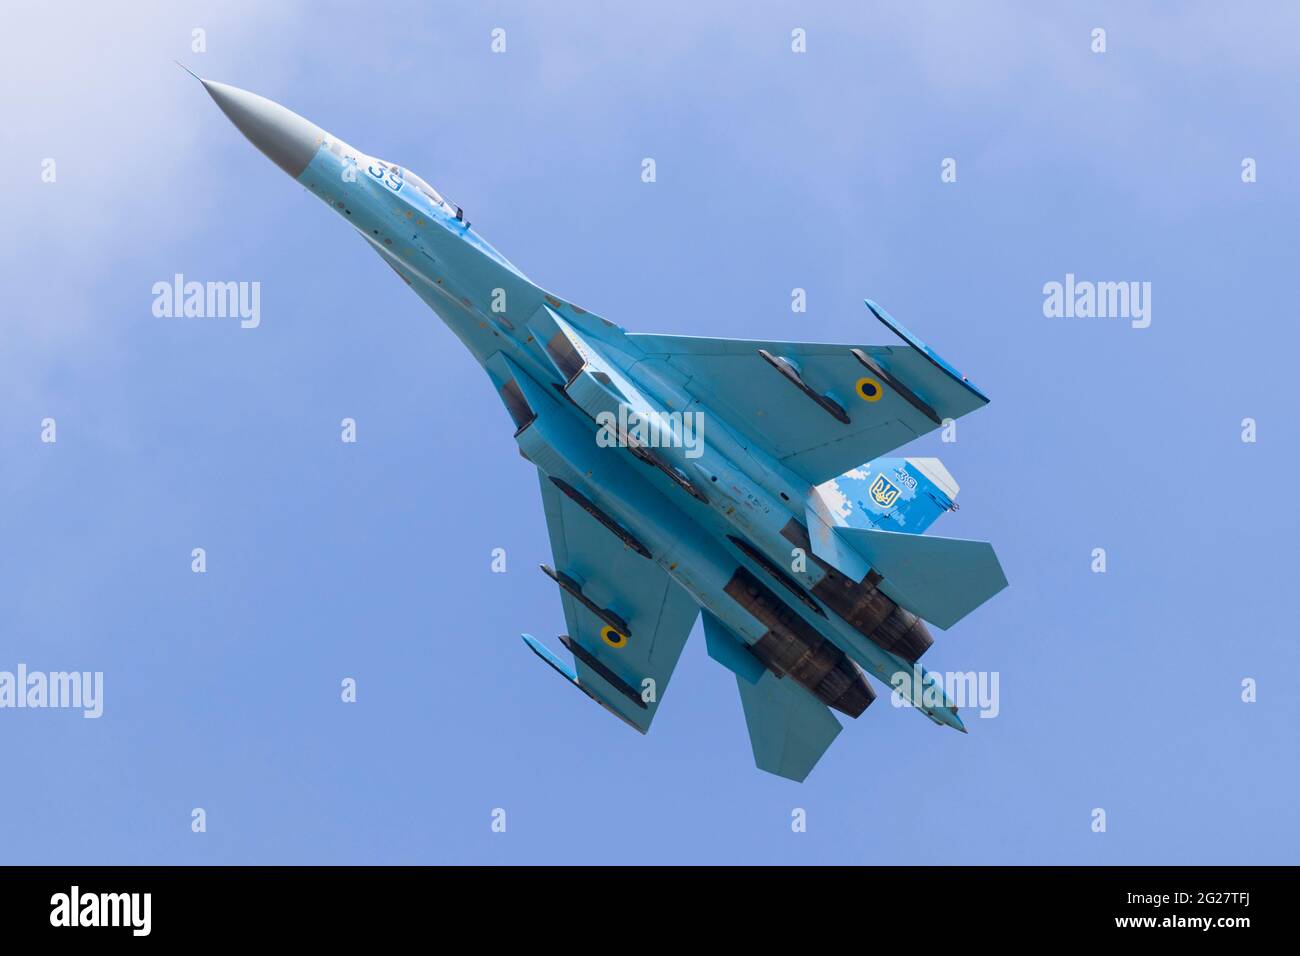 A Ukrainian Air Force Sukhoi Su-27 Flanker taking off Stock Photo - Alamy